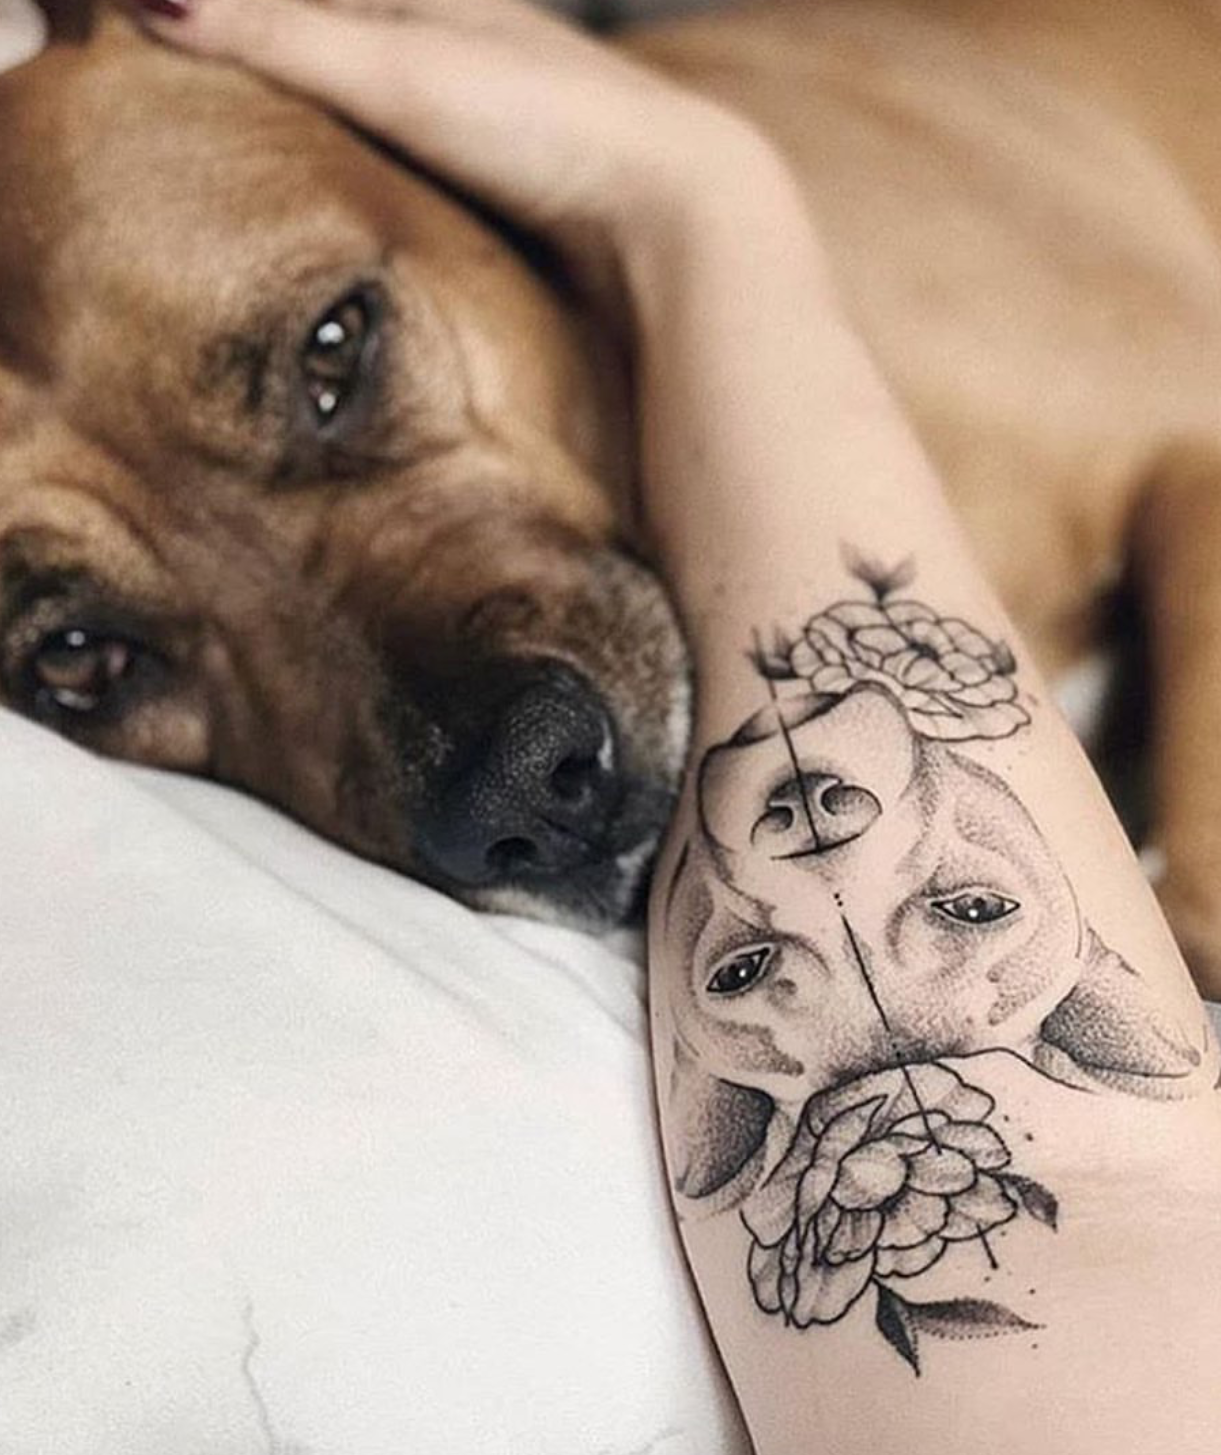 Loving dogs tattoo ideas